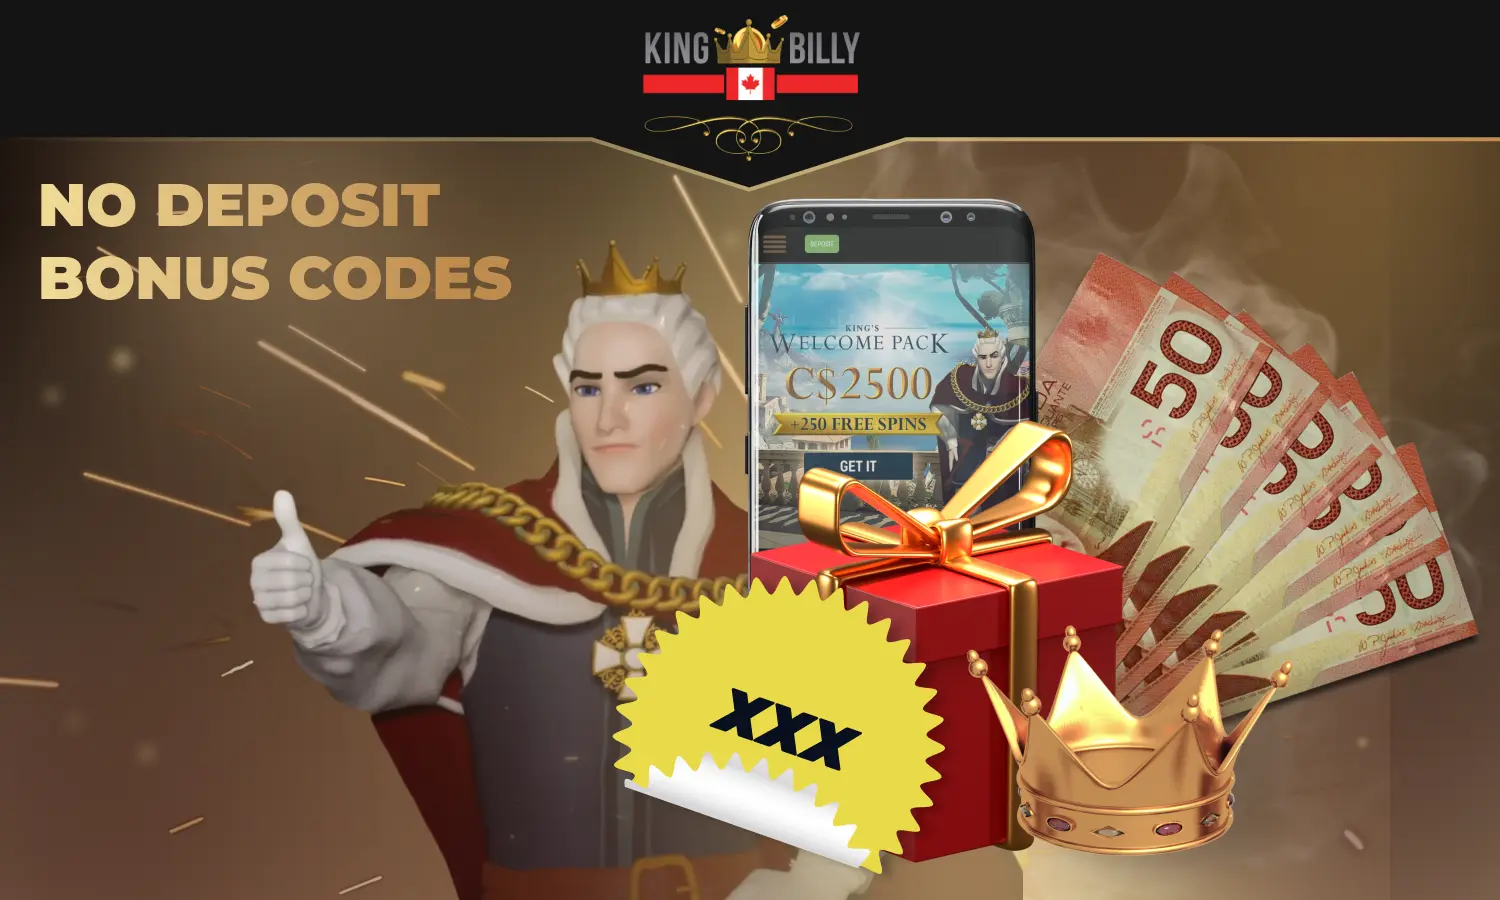 Canadian players can get no deposit bonus code at King Billy